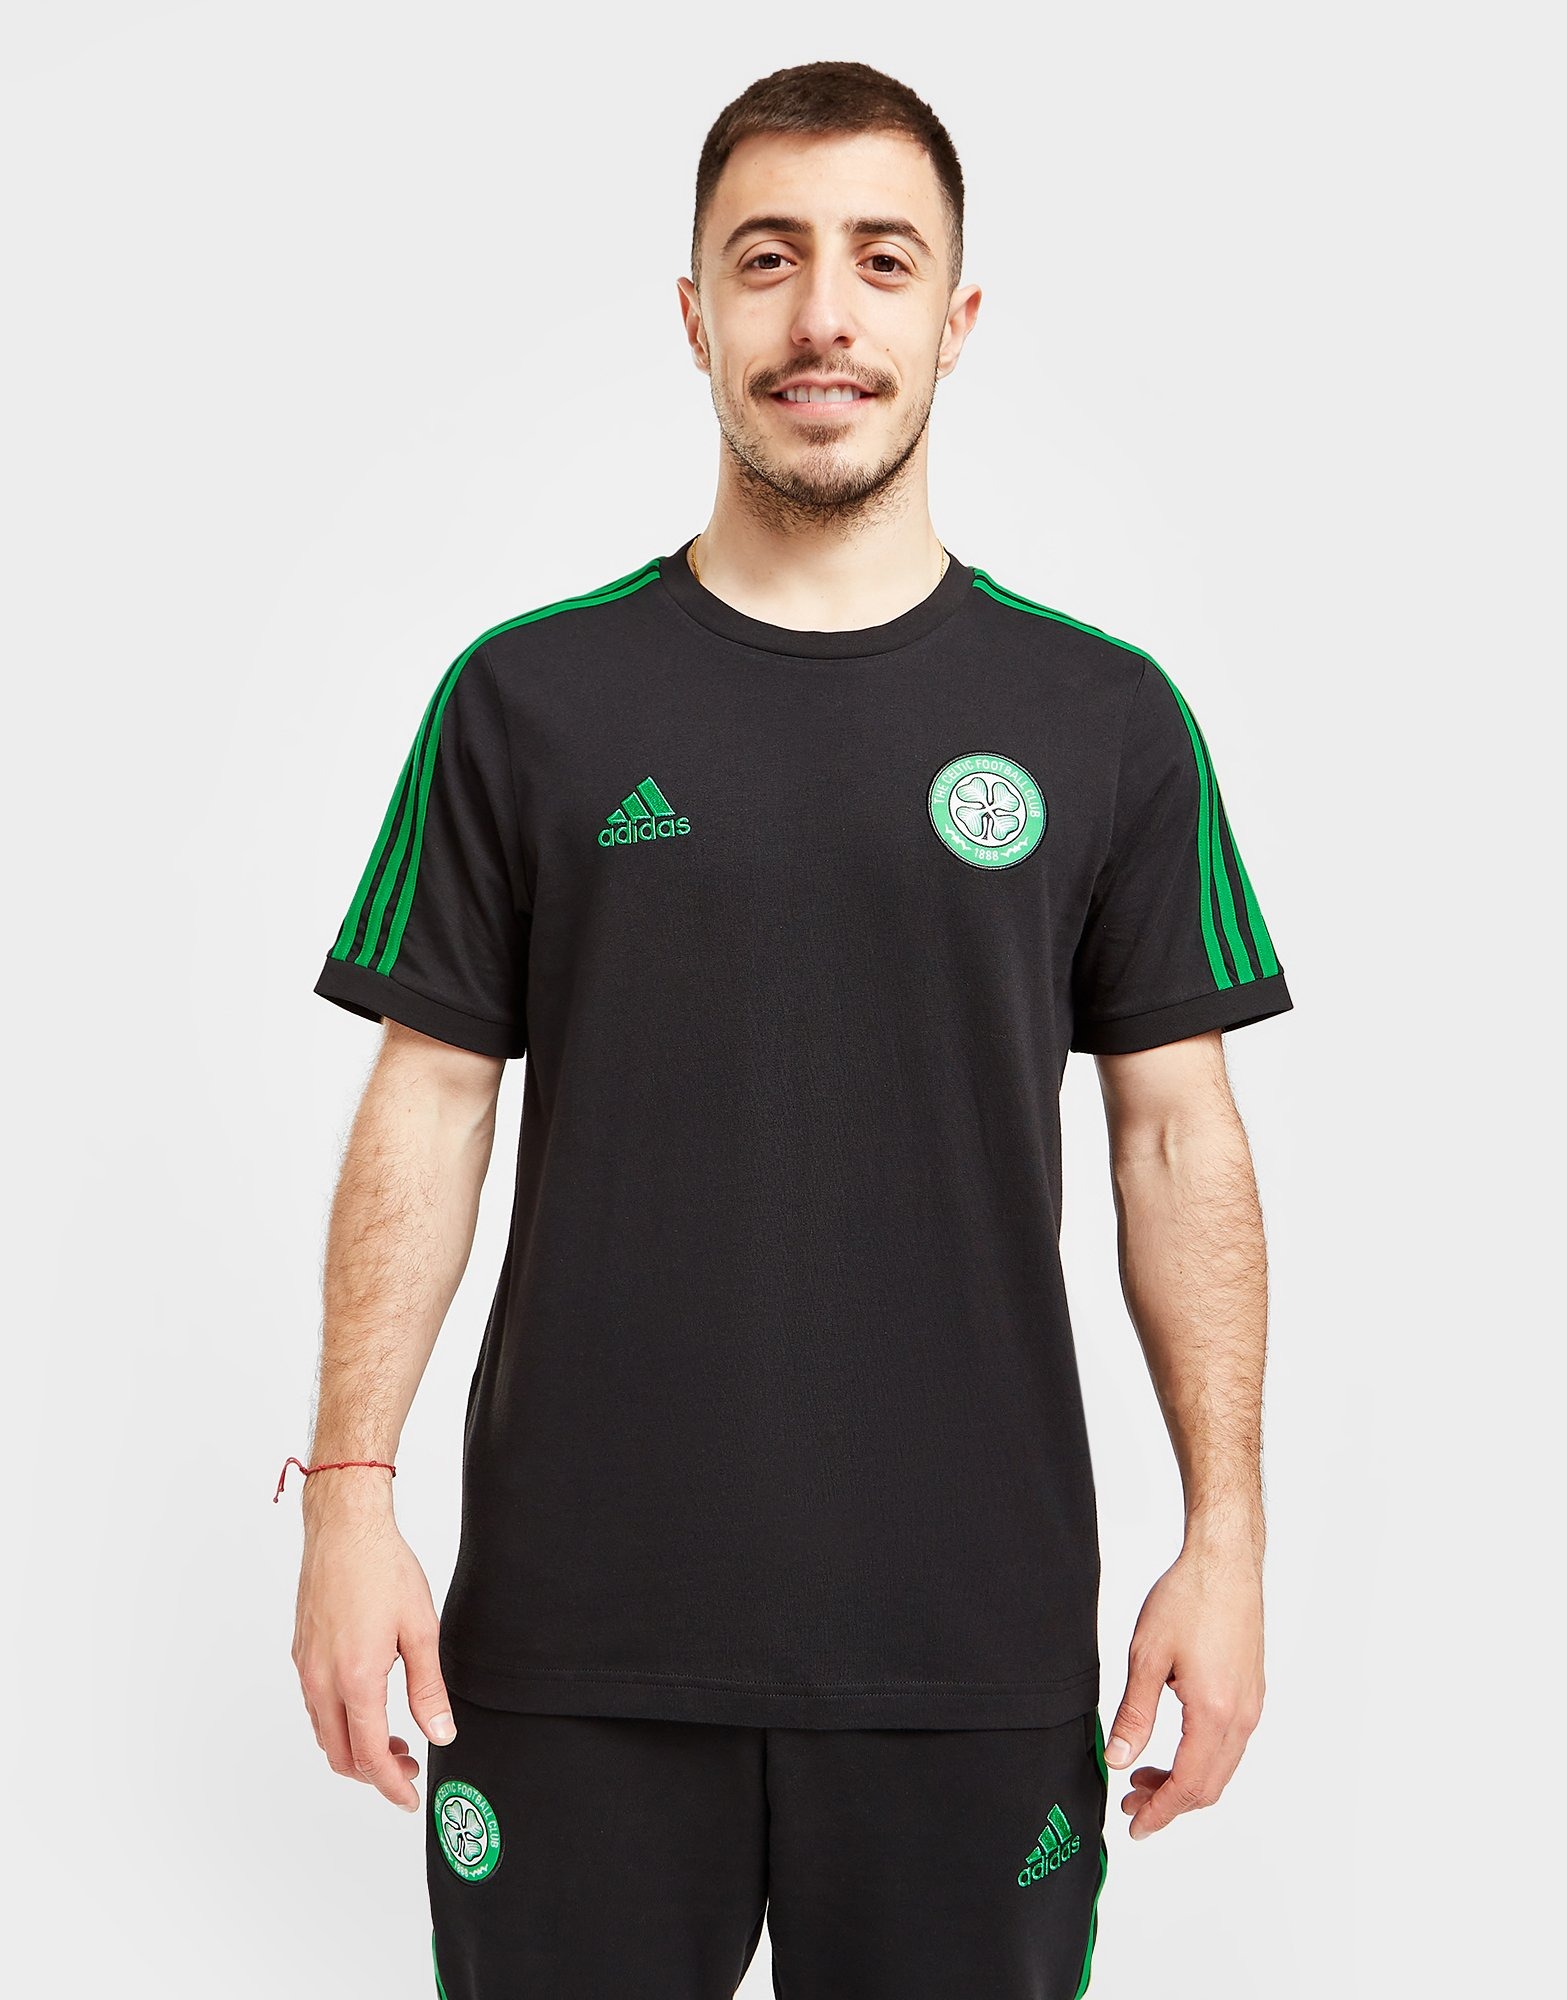 Buy Celtic Adidas Training Shirt (Excellent) - M - Retro Football Kits UK